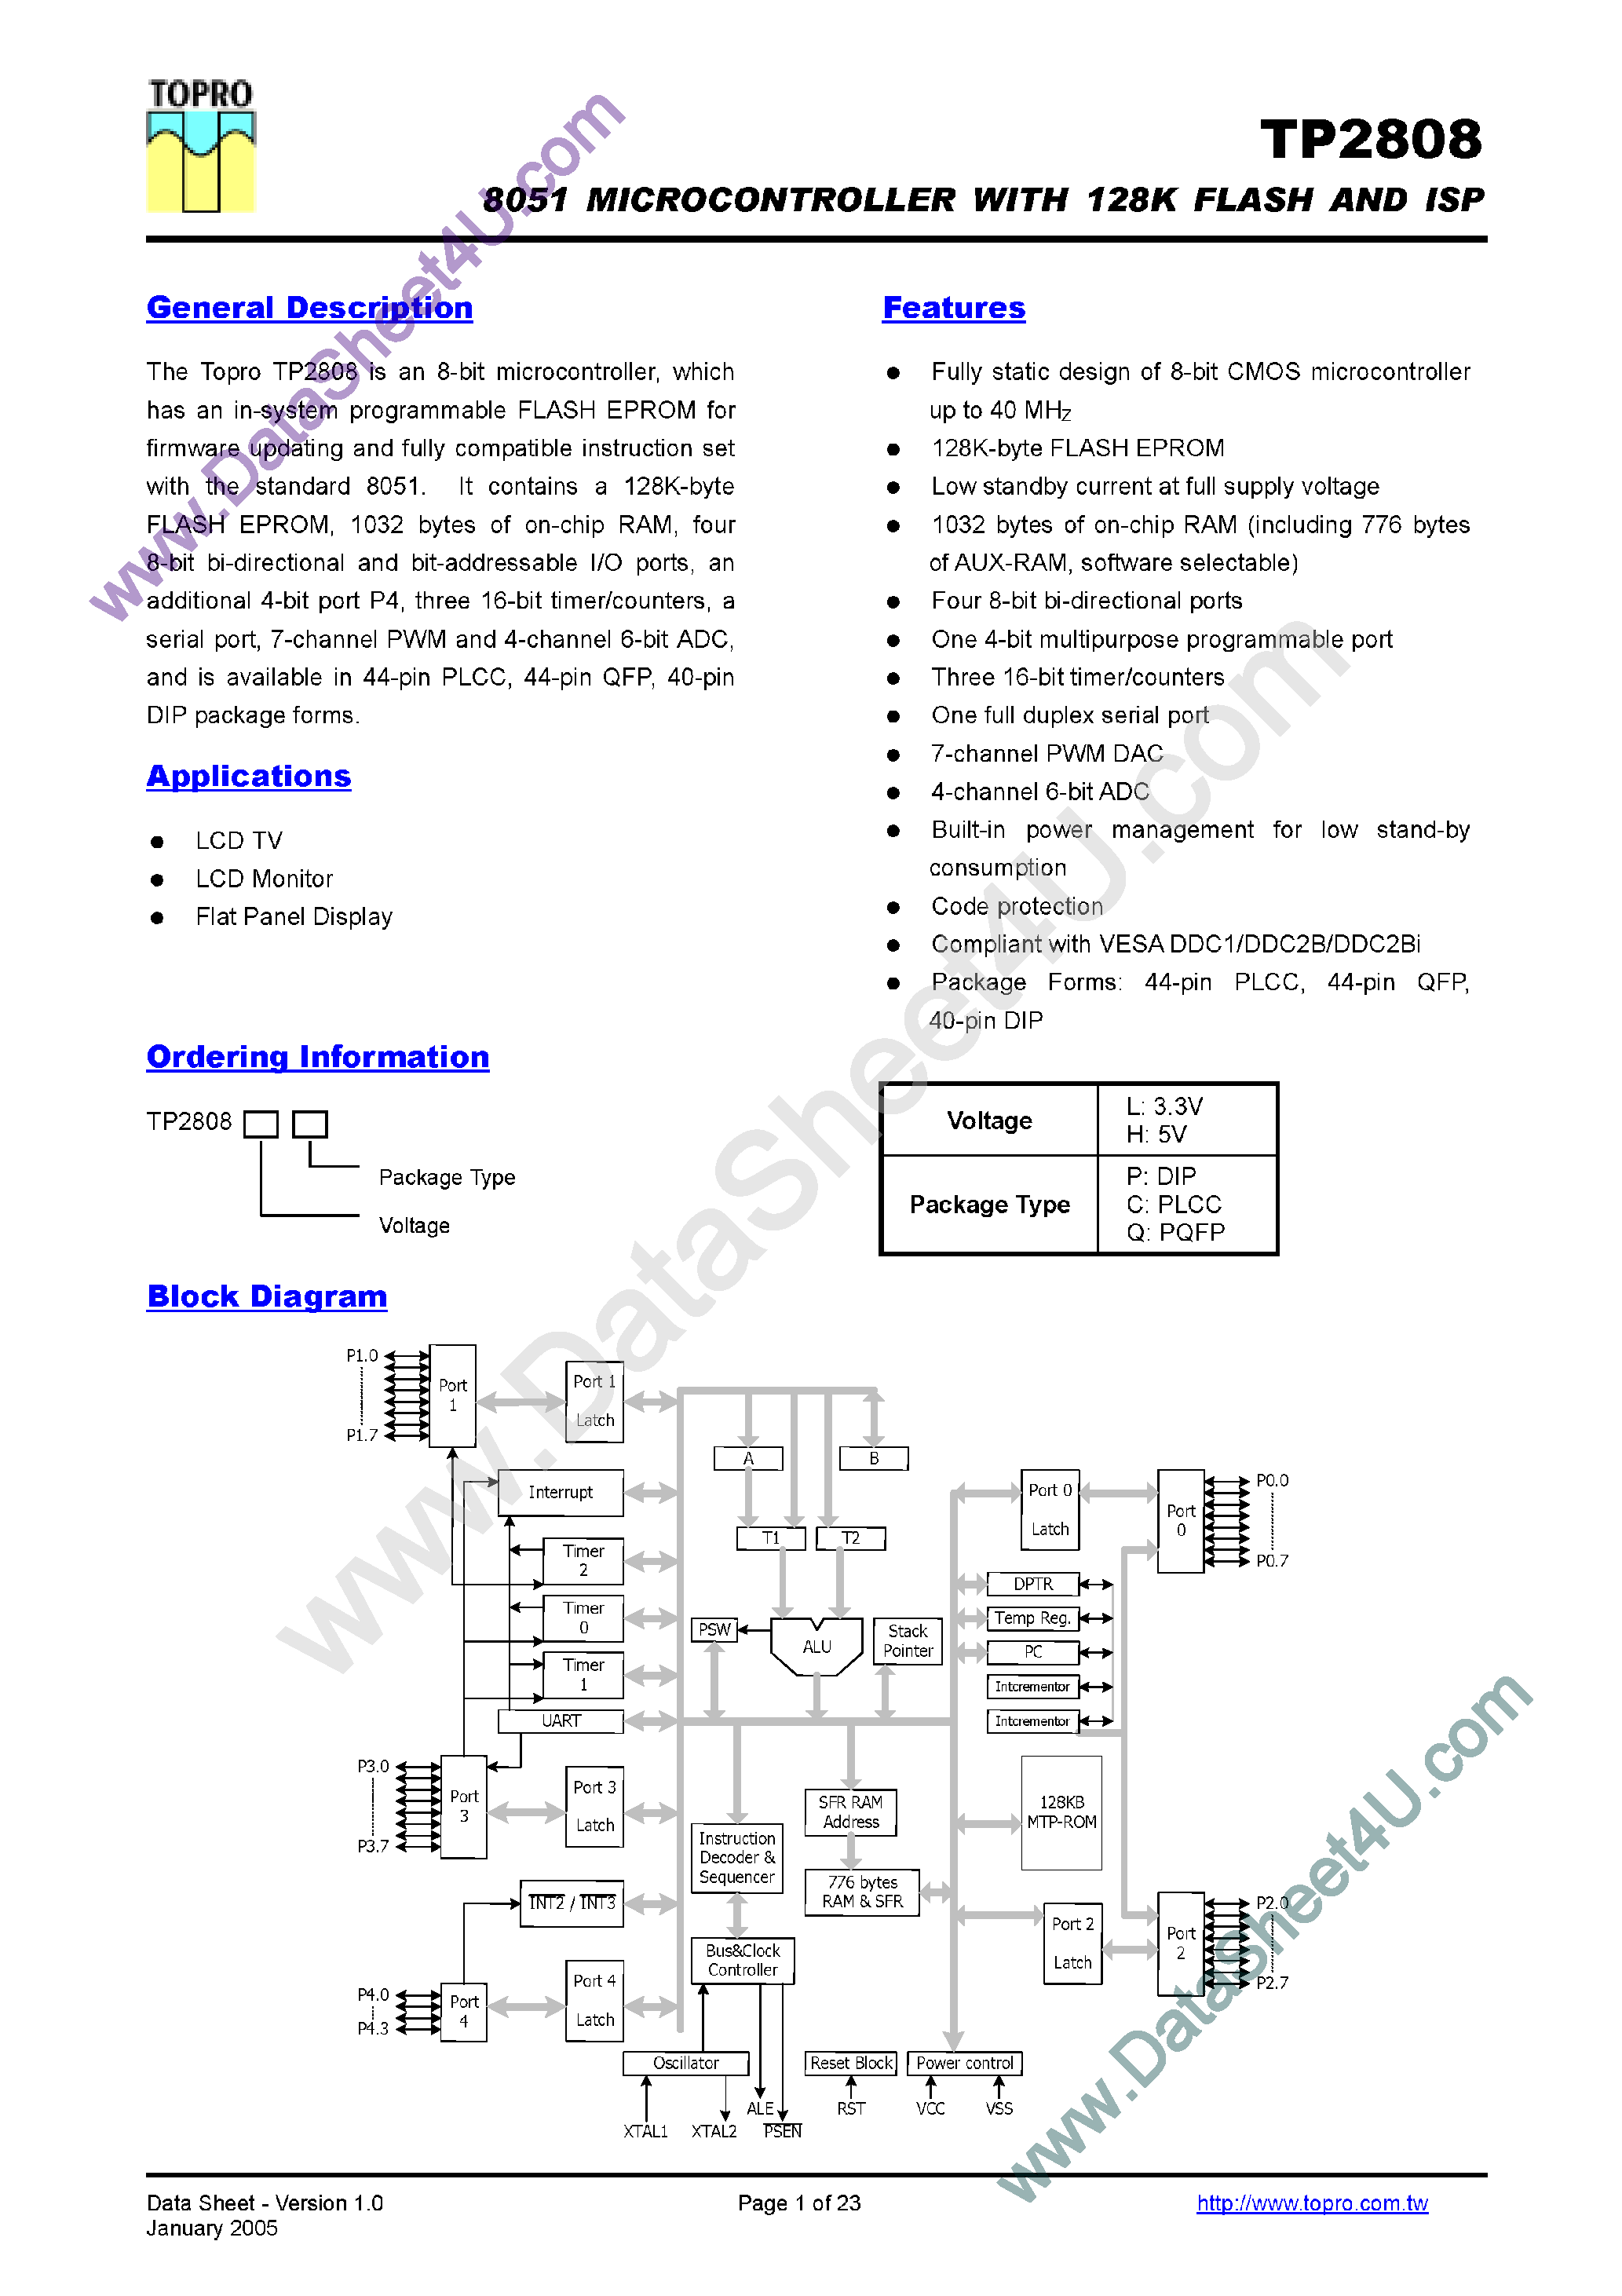 Datasheet TP2808 - 8051 Microcontroller page 1